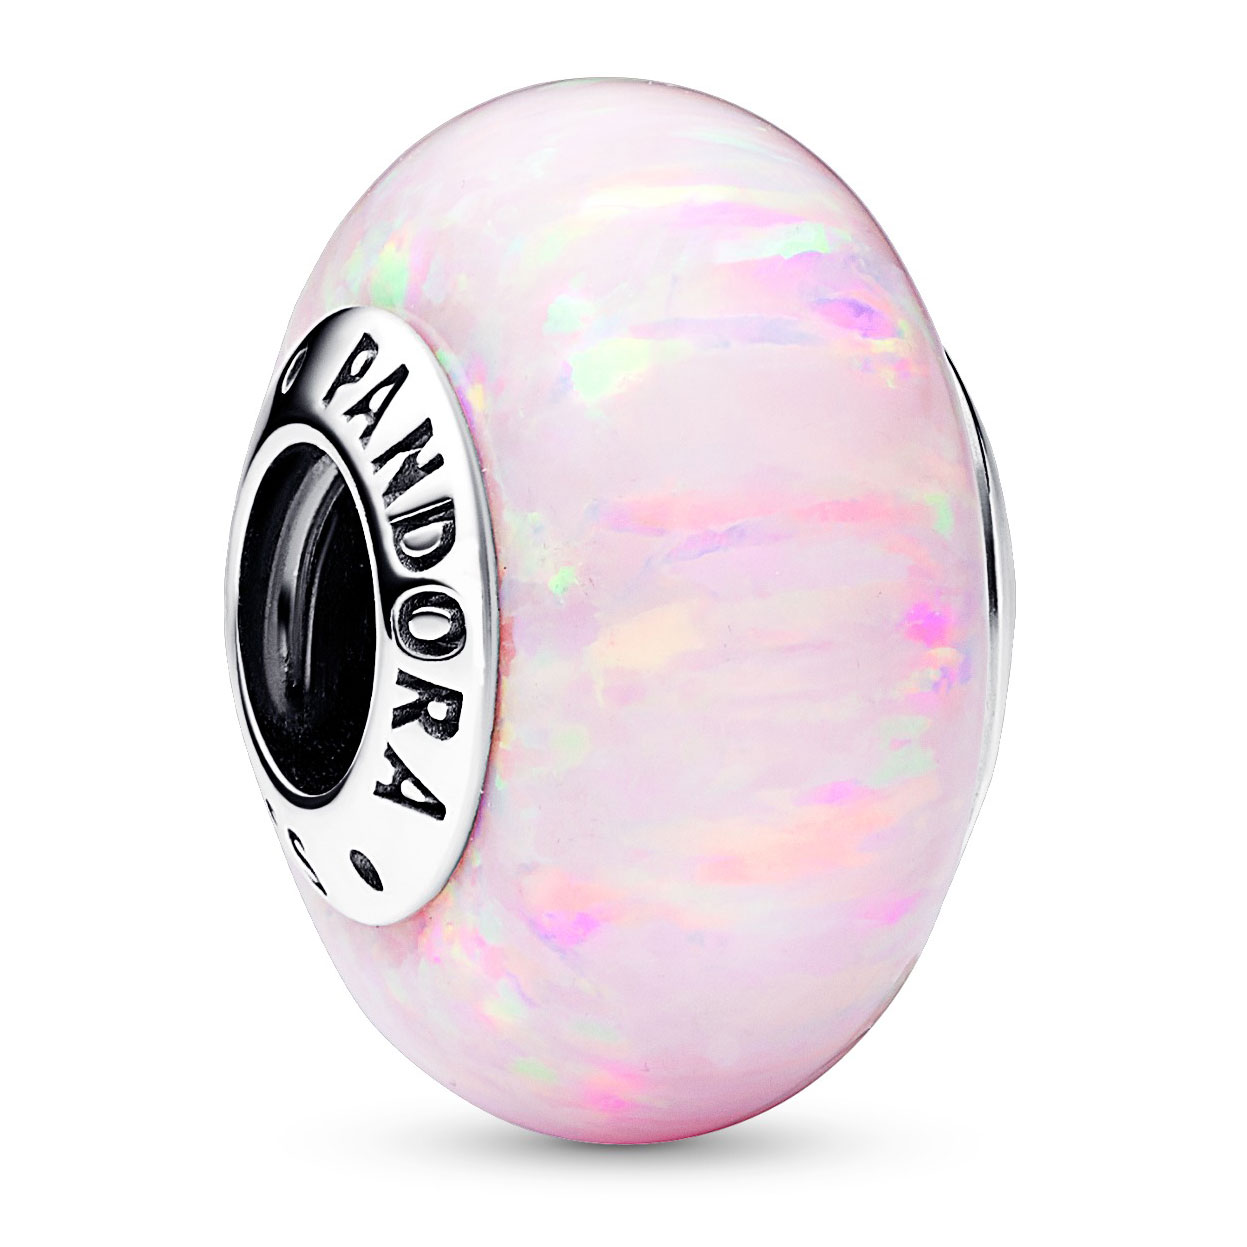 Pandora Opalescent Pink Charm: Precious Accents, Ltd.